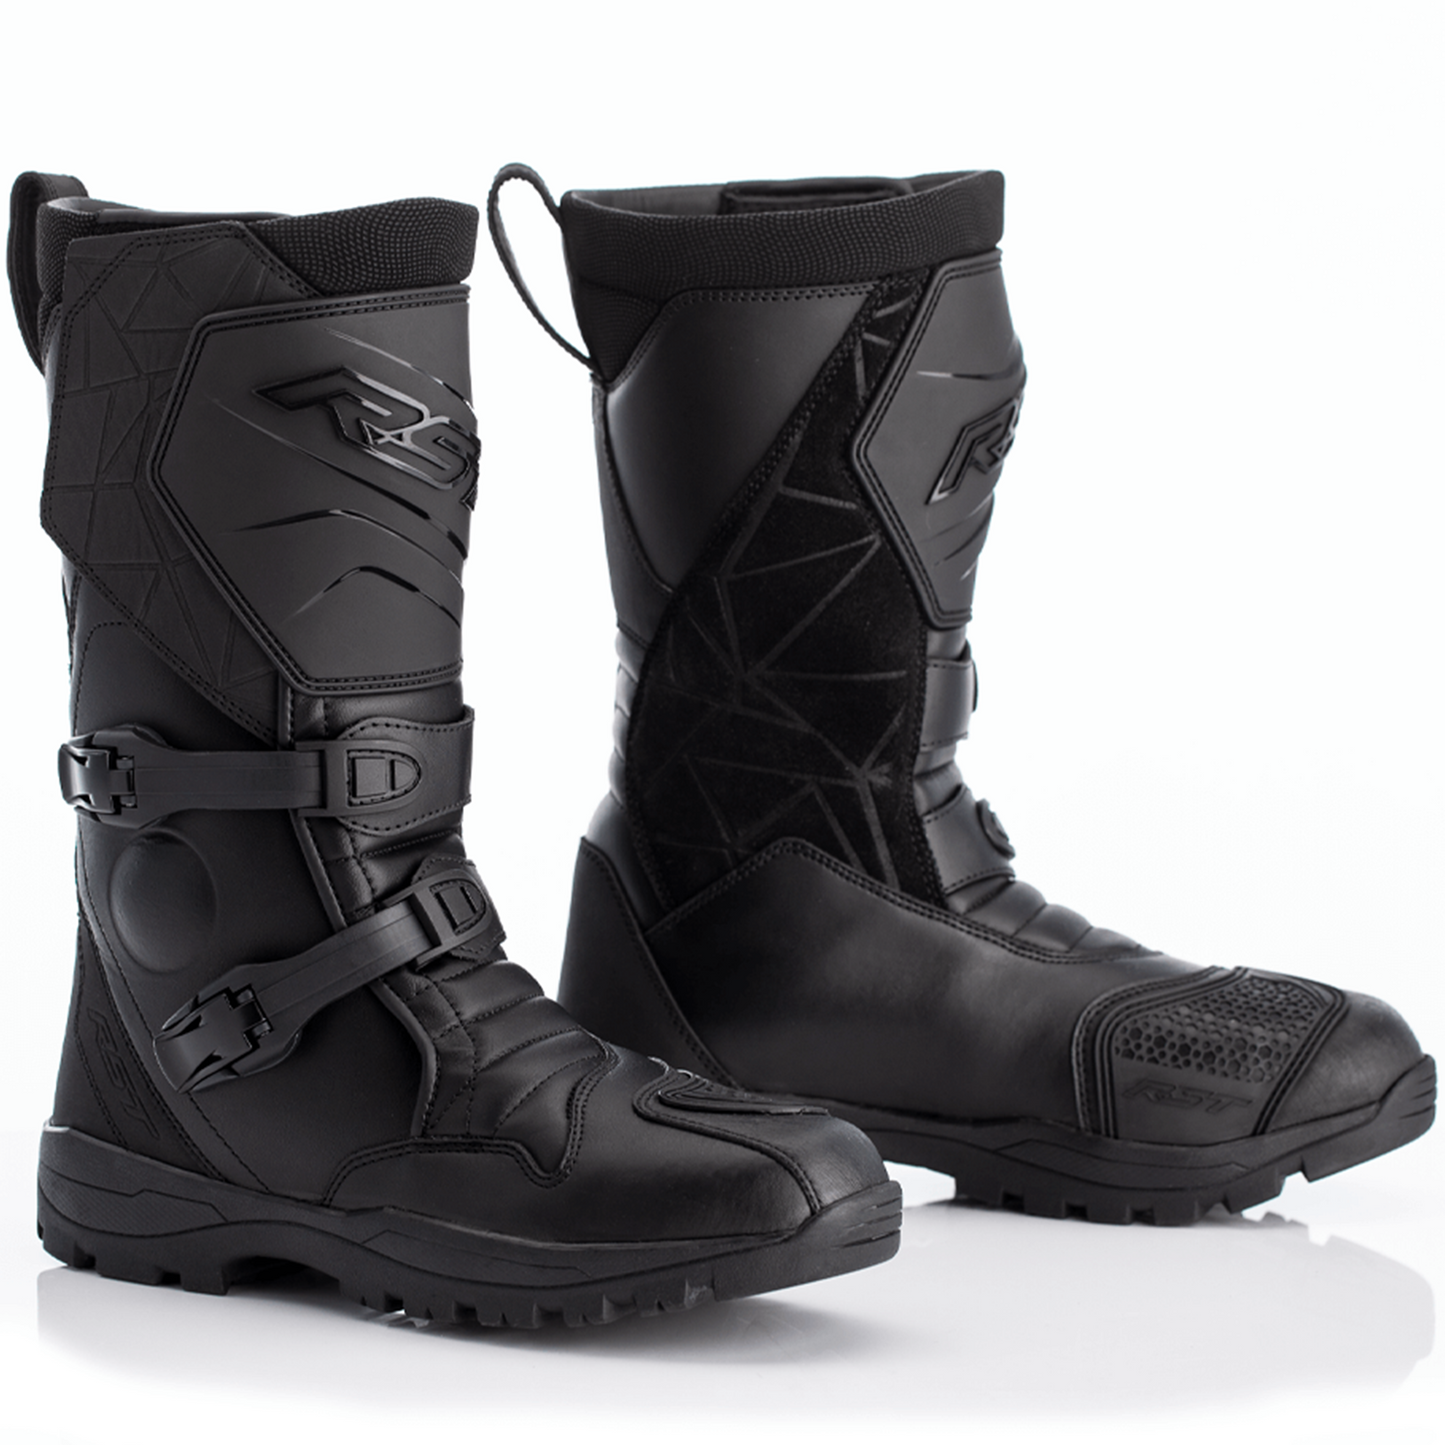 RST Adventure-X (CE) Waterproof Boots (2751) Black